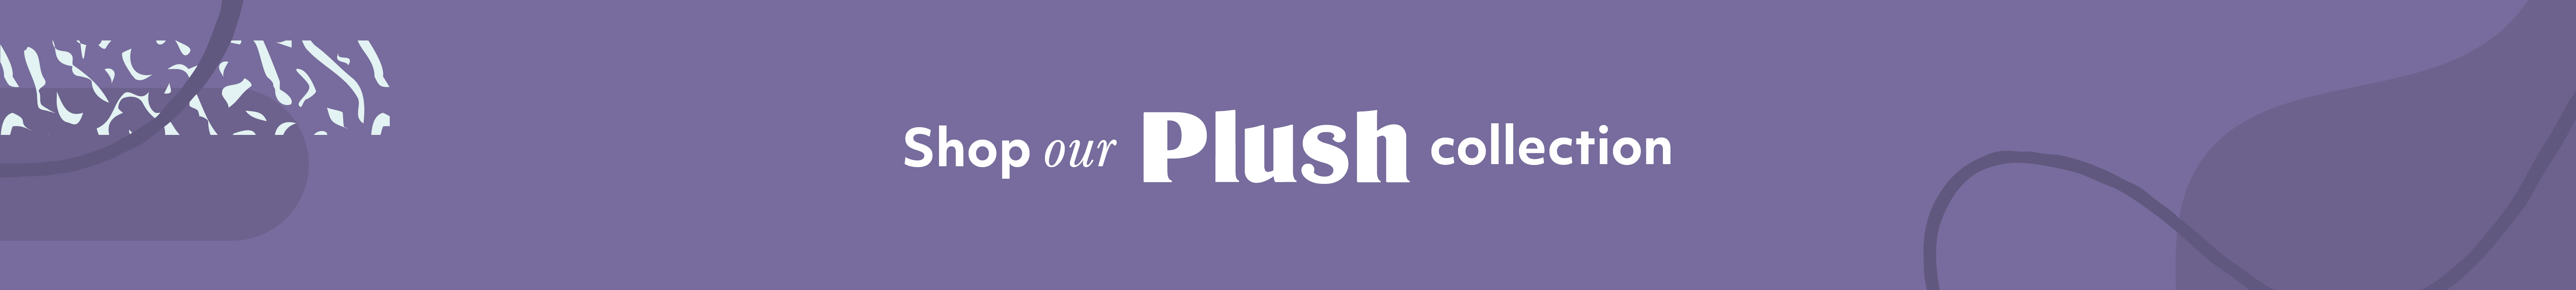 Shop our Plush collection